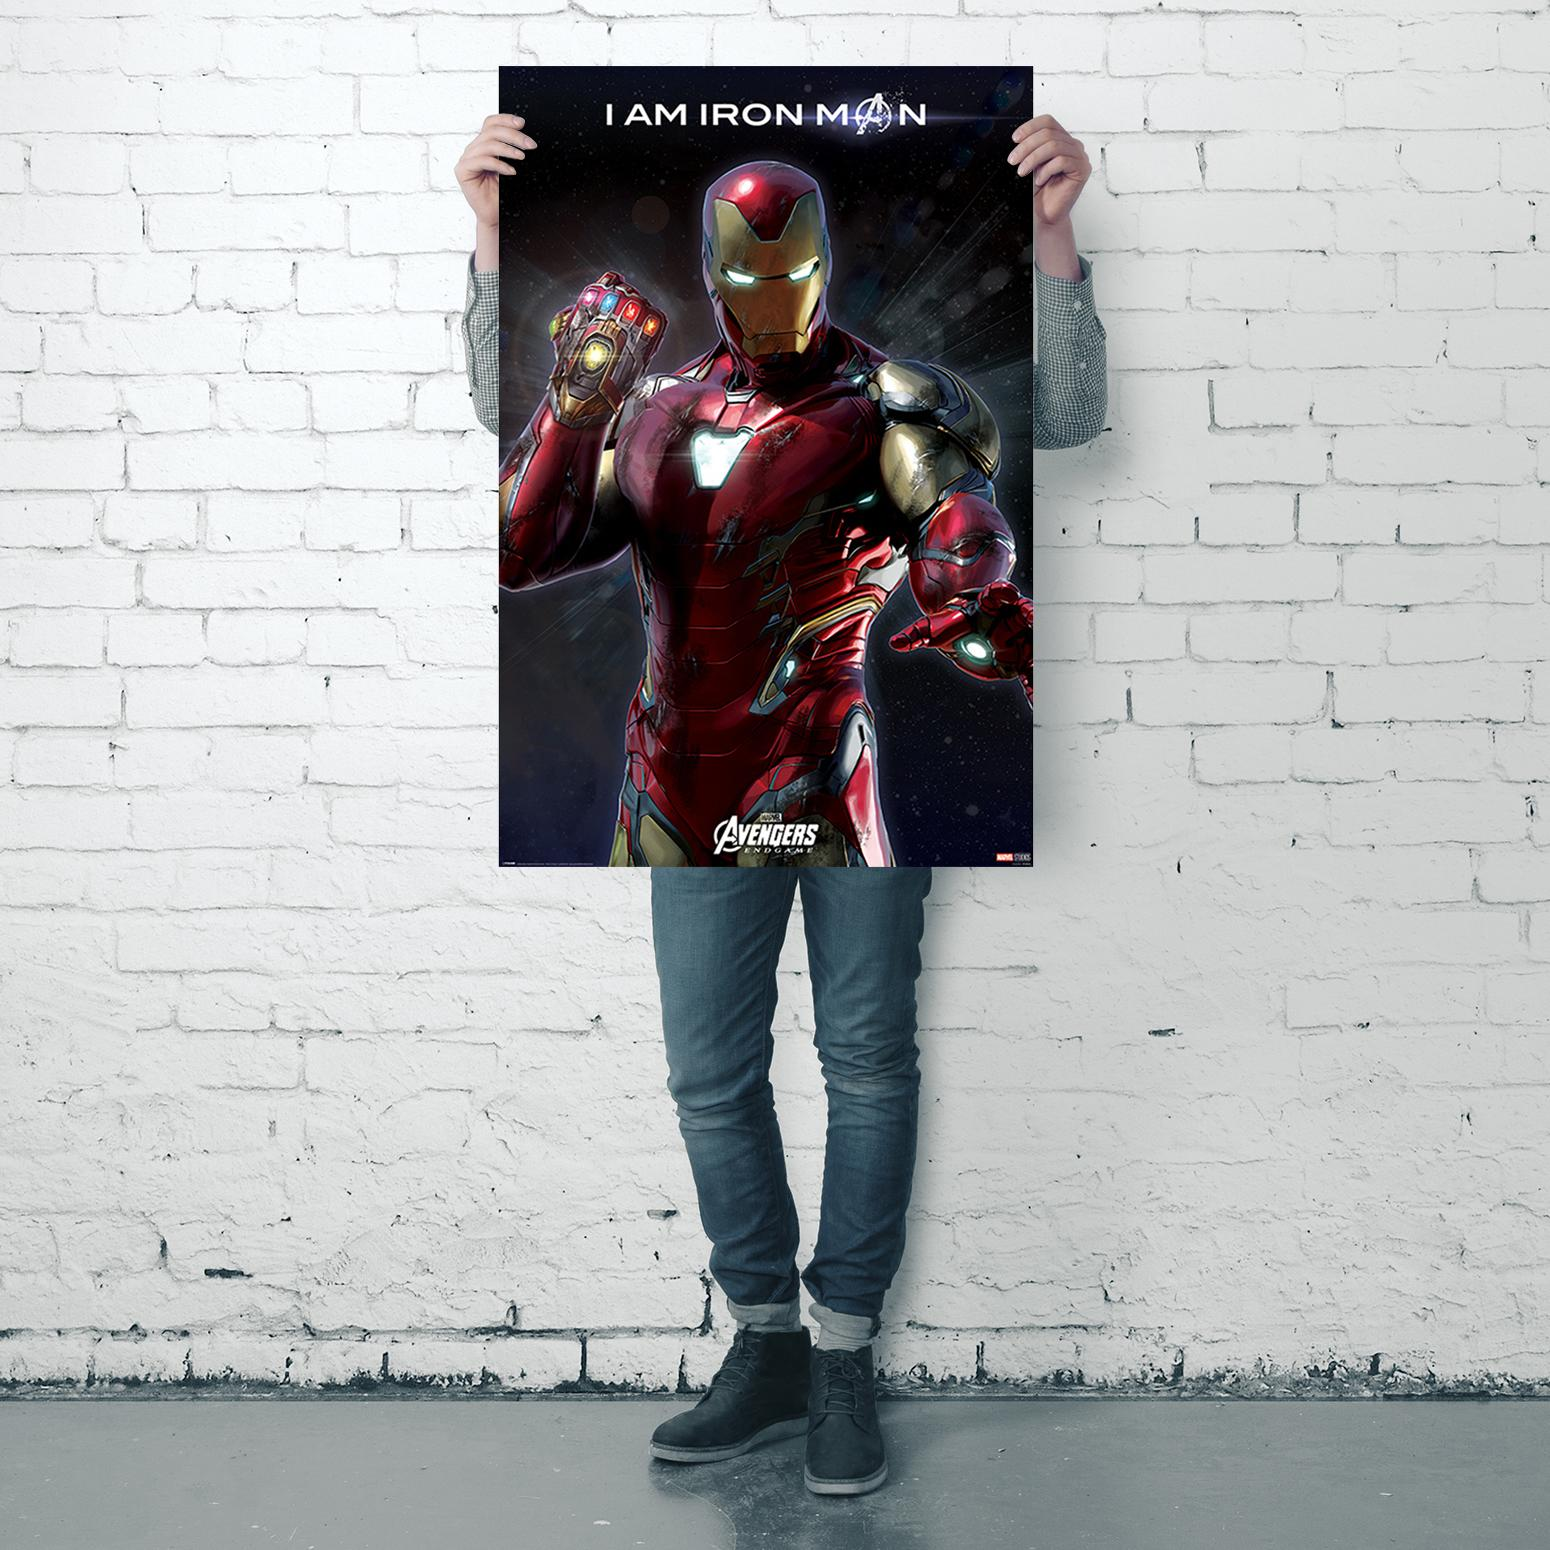 Endgame INTERNATIONAL Am Man Poster I Großformatige Avengers: PYRAMID Iron Poster